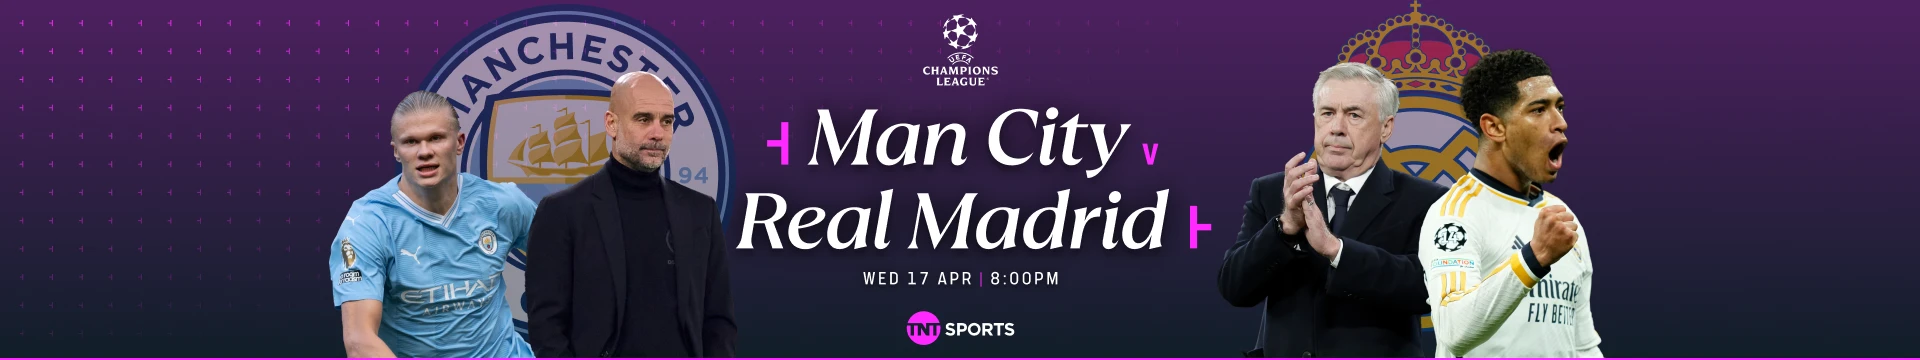 Man City v Real Madrid Wednesday 17 April at 8pm